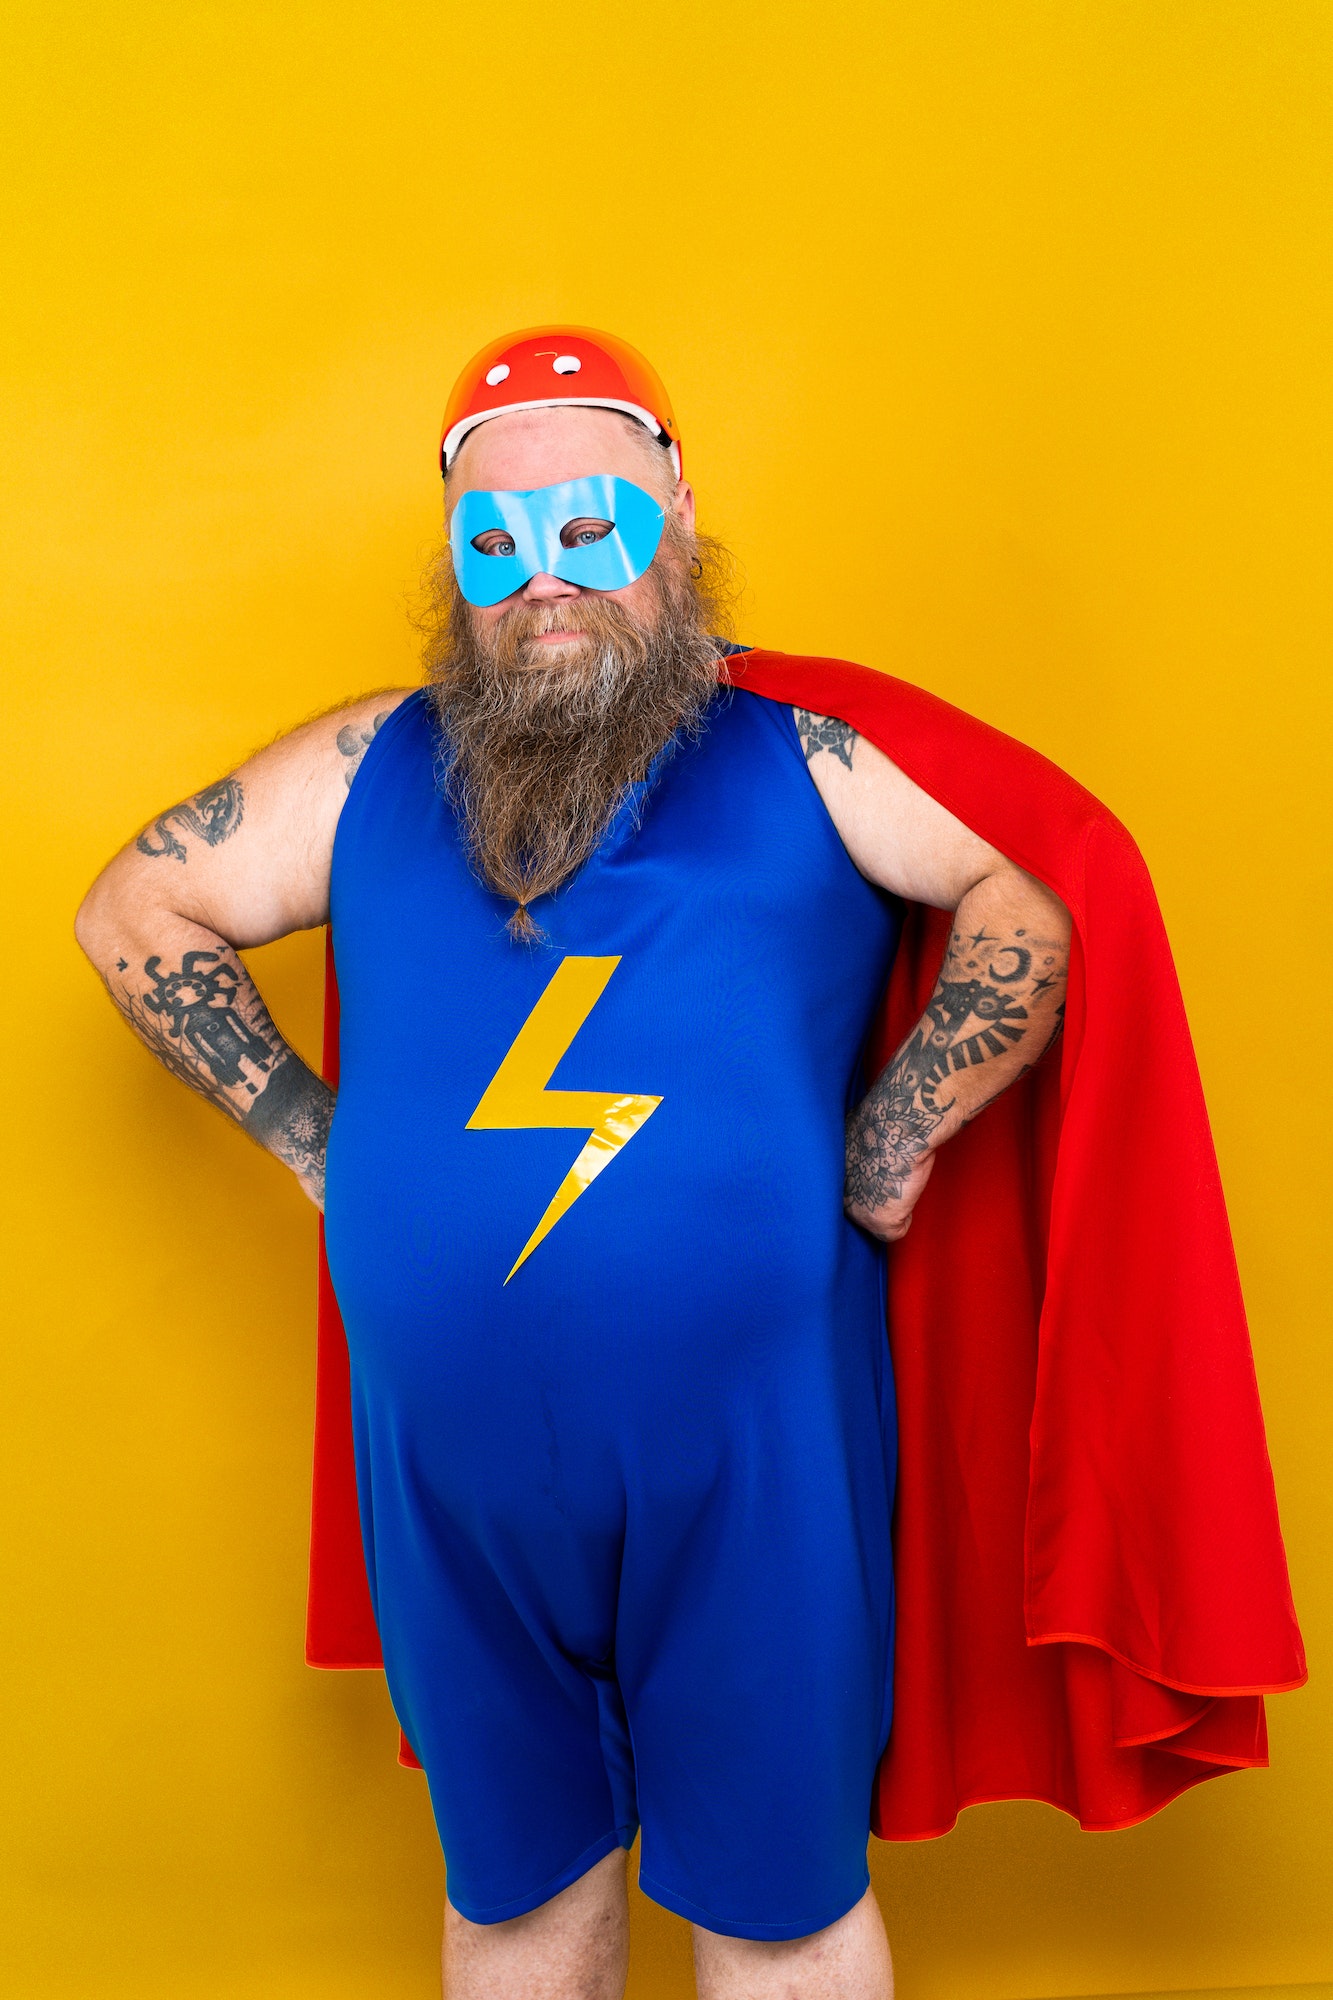 Funny fat man with superhero costume